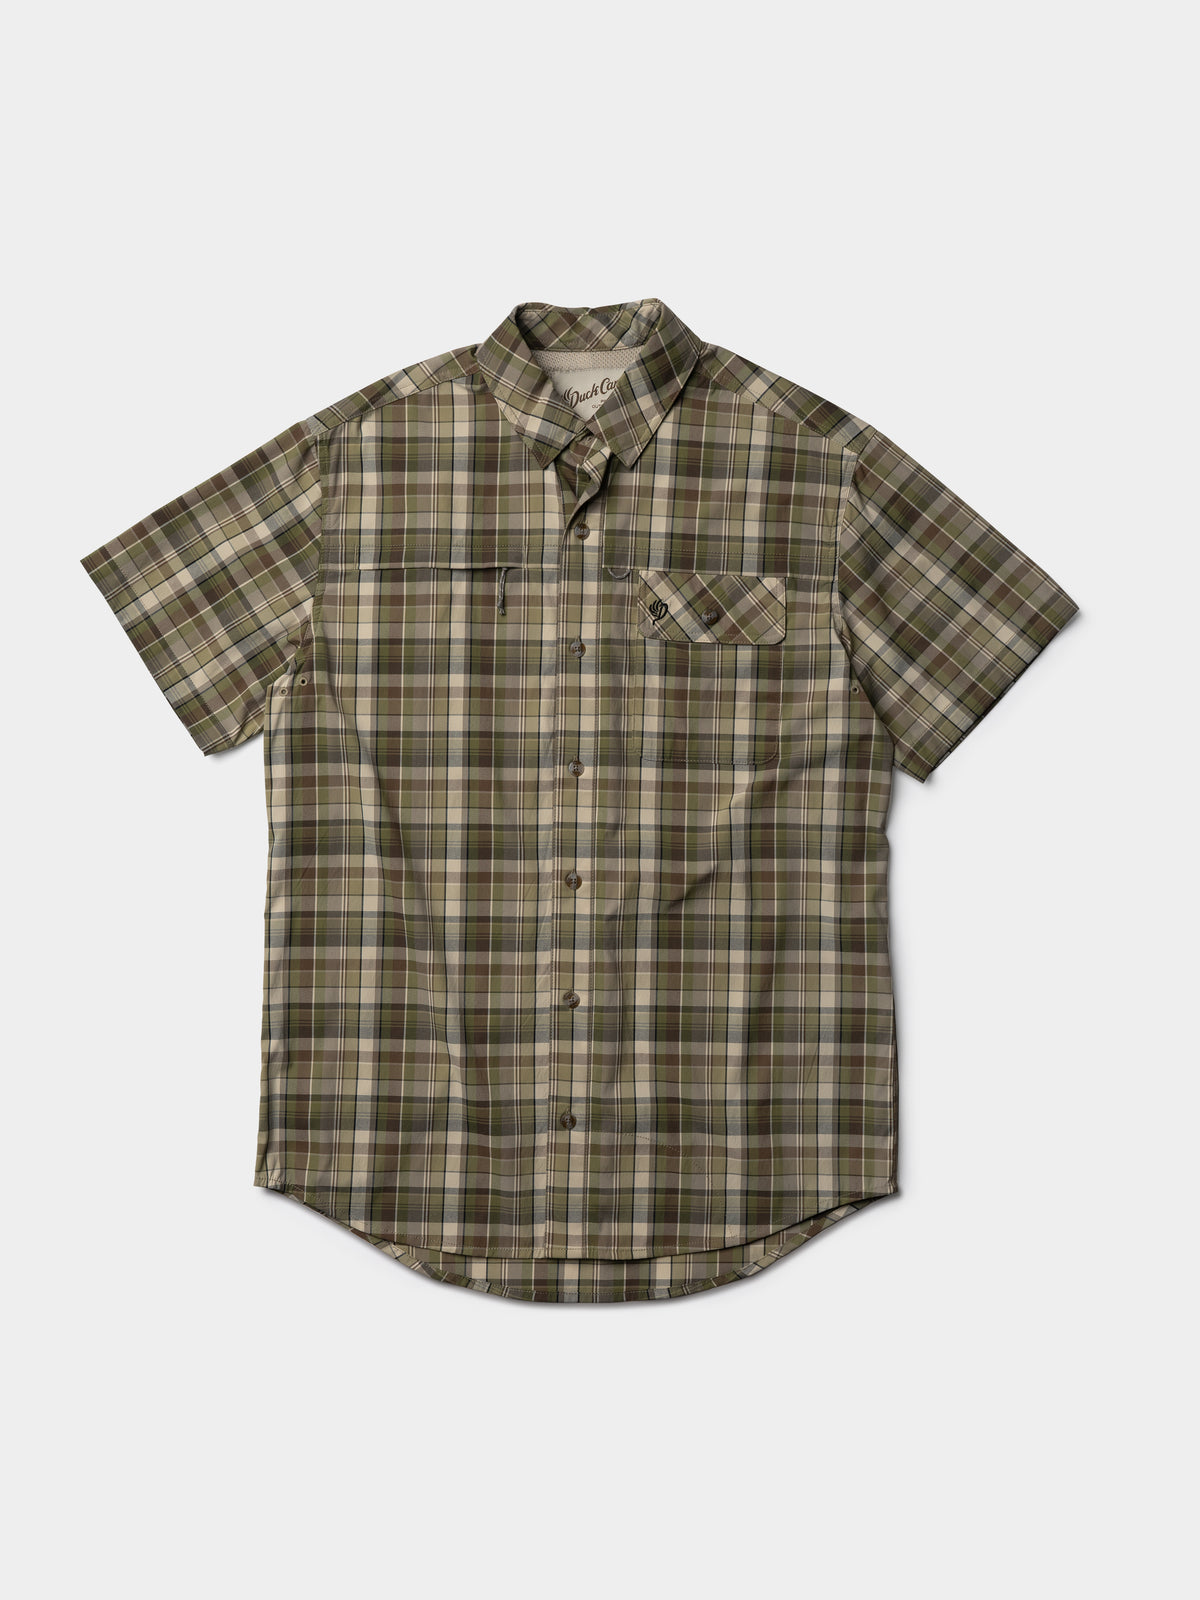 Duck Camp Signature Fishing Shirt - Short Sleeve - Pickwick Plaid, L